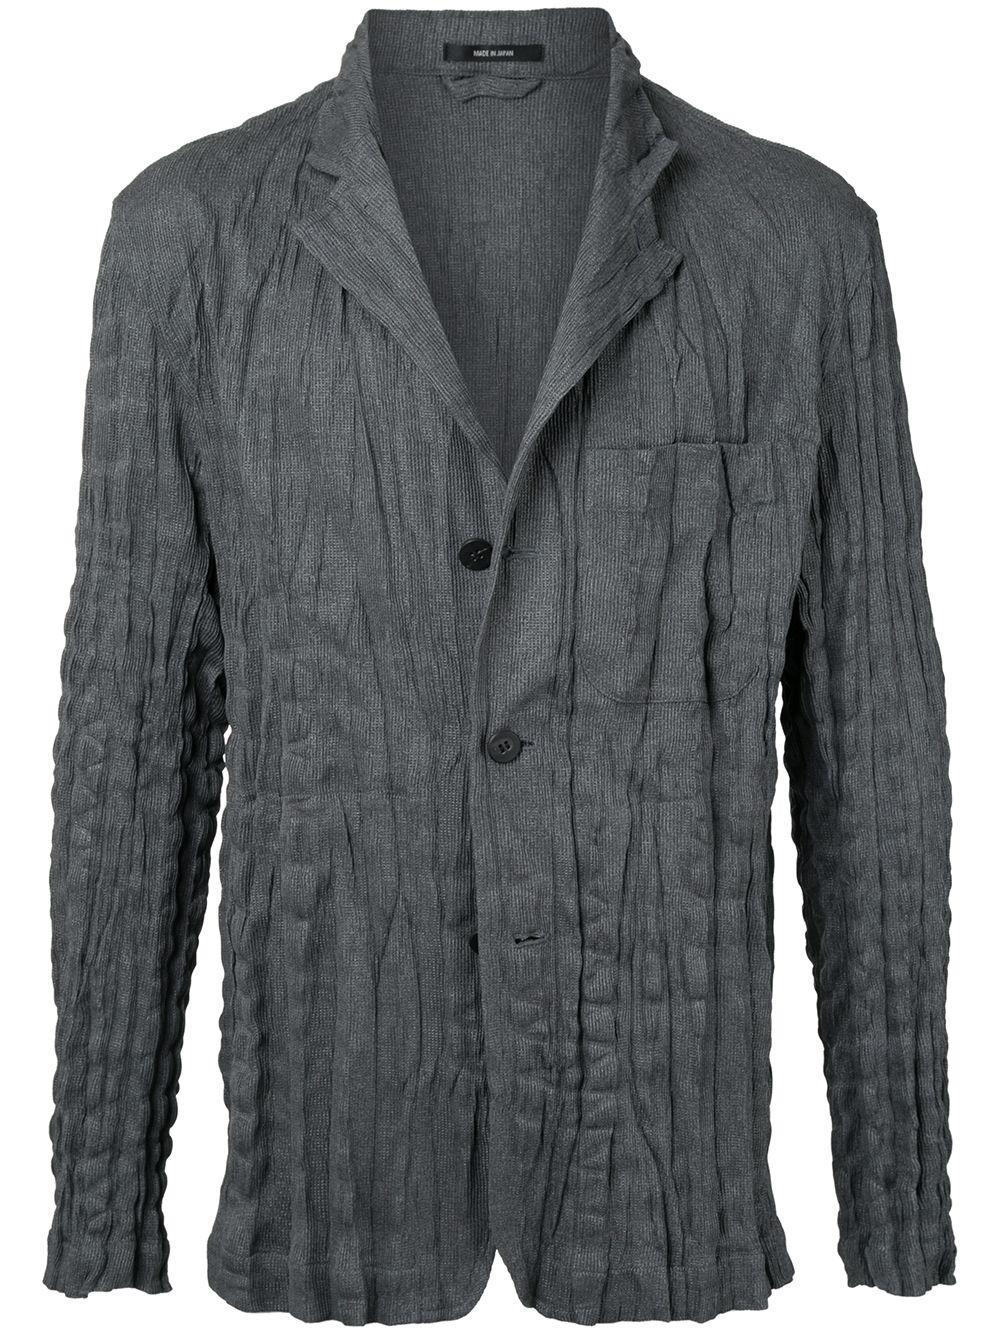 Issey Miyake Pleated Blazer Jacket in Grey (Gray) for Men - Lyst